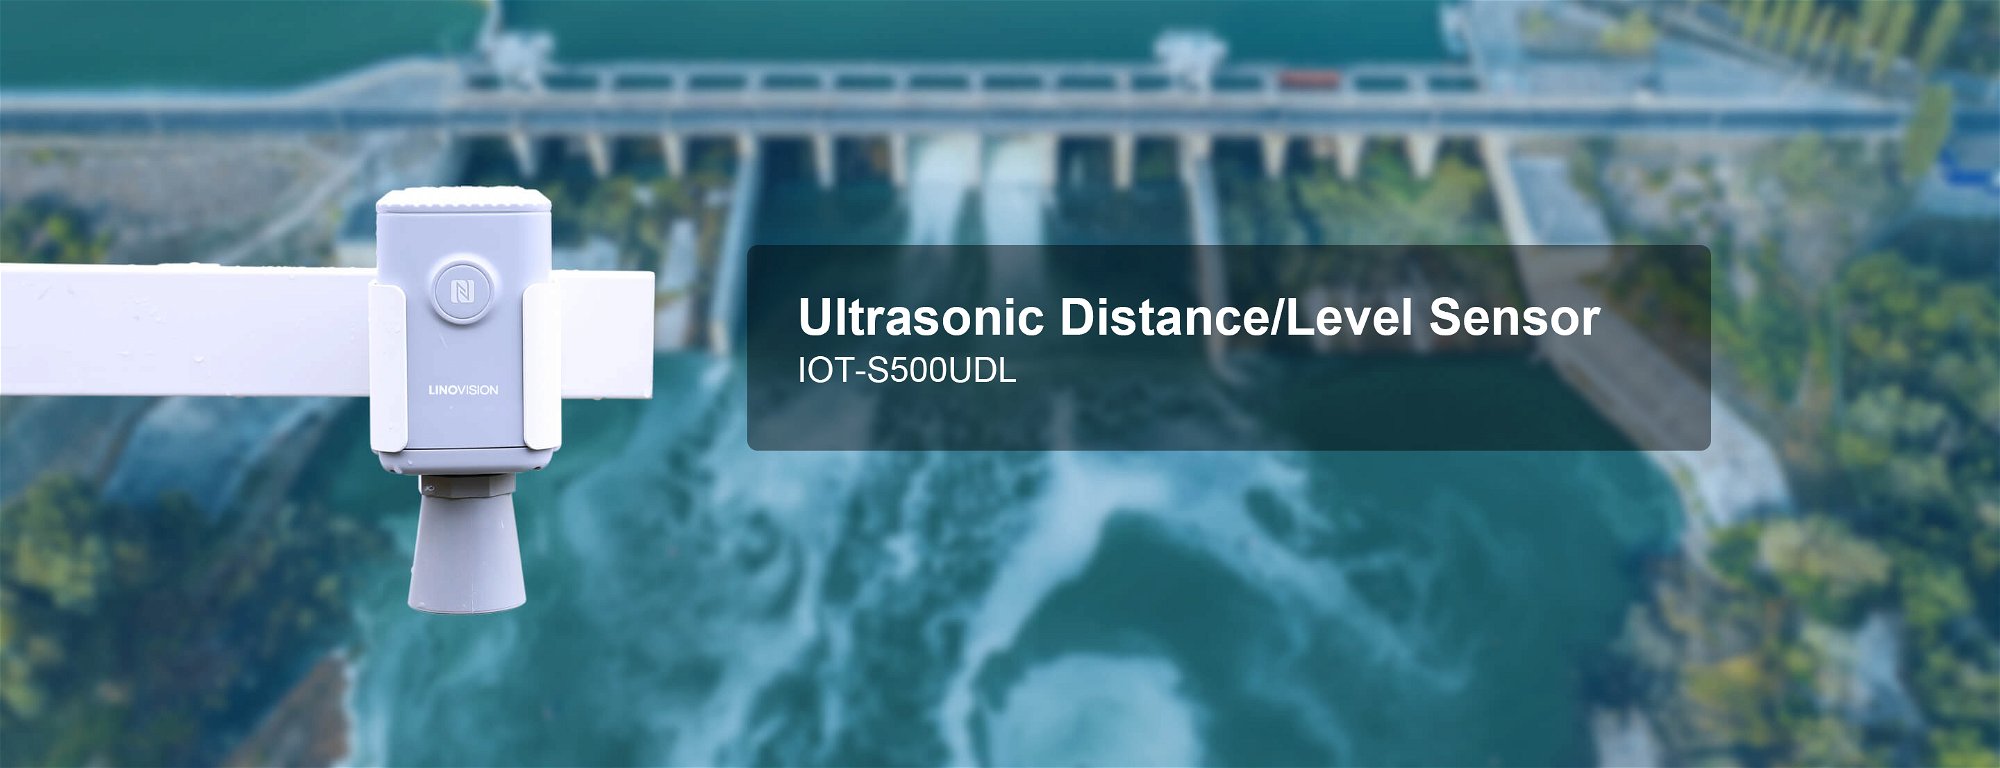 LoRaWAN Wireless Ultrasonic Distance/Level Sensor with Battery